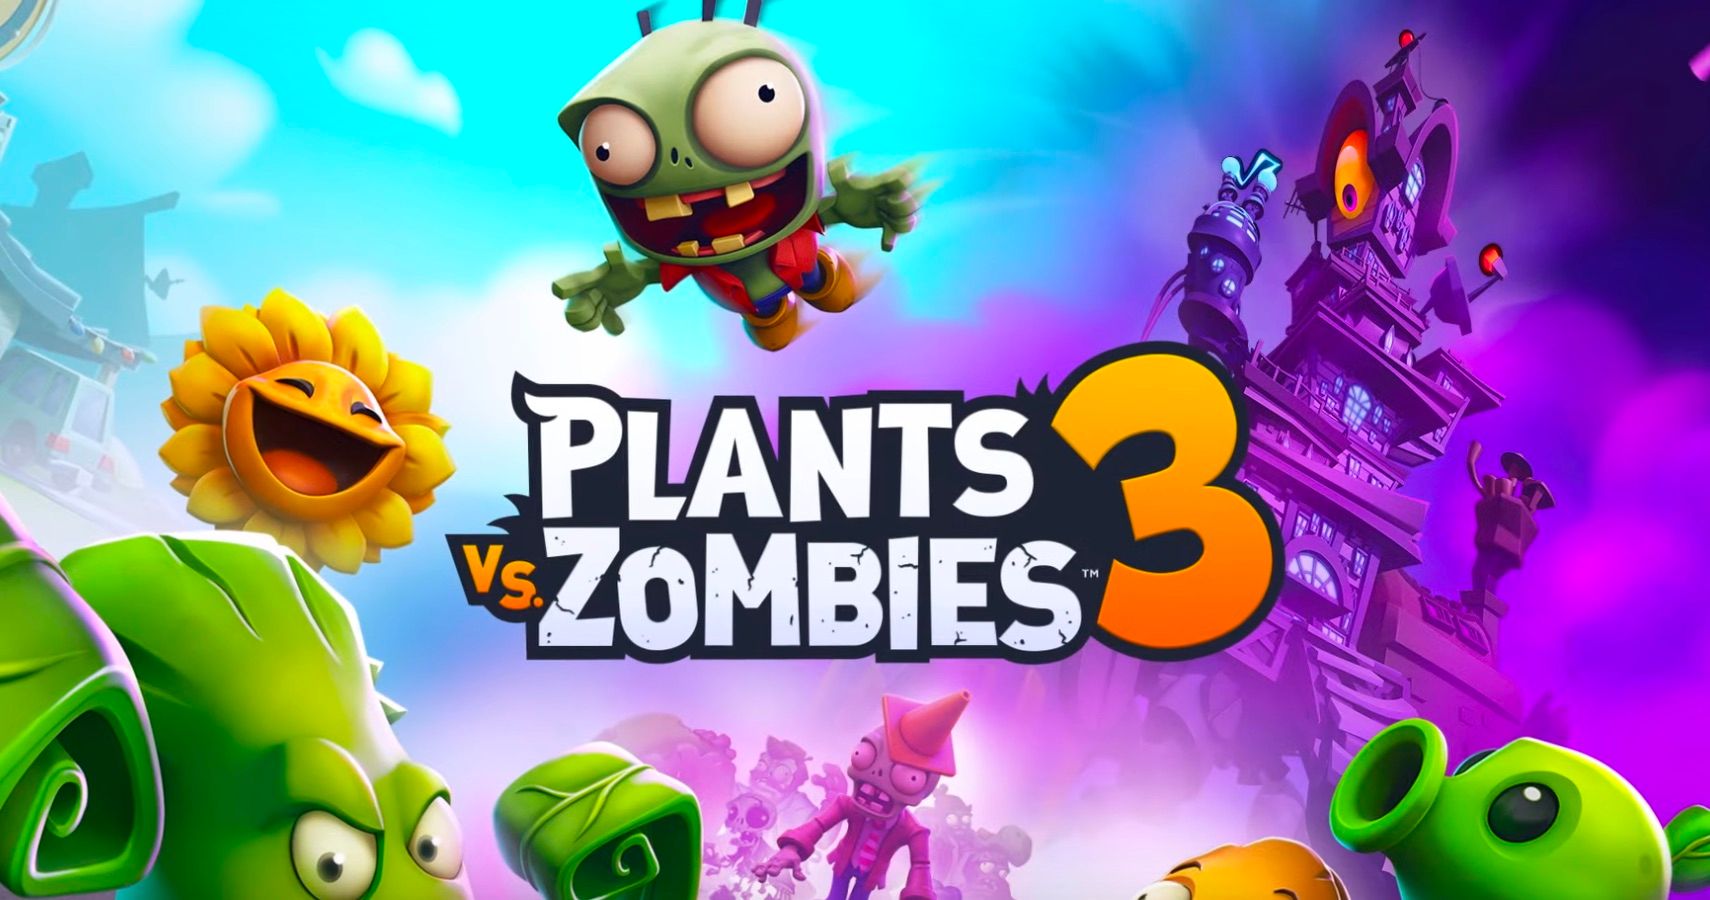 zombie vs plants 3 download